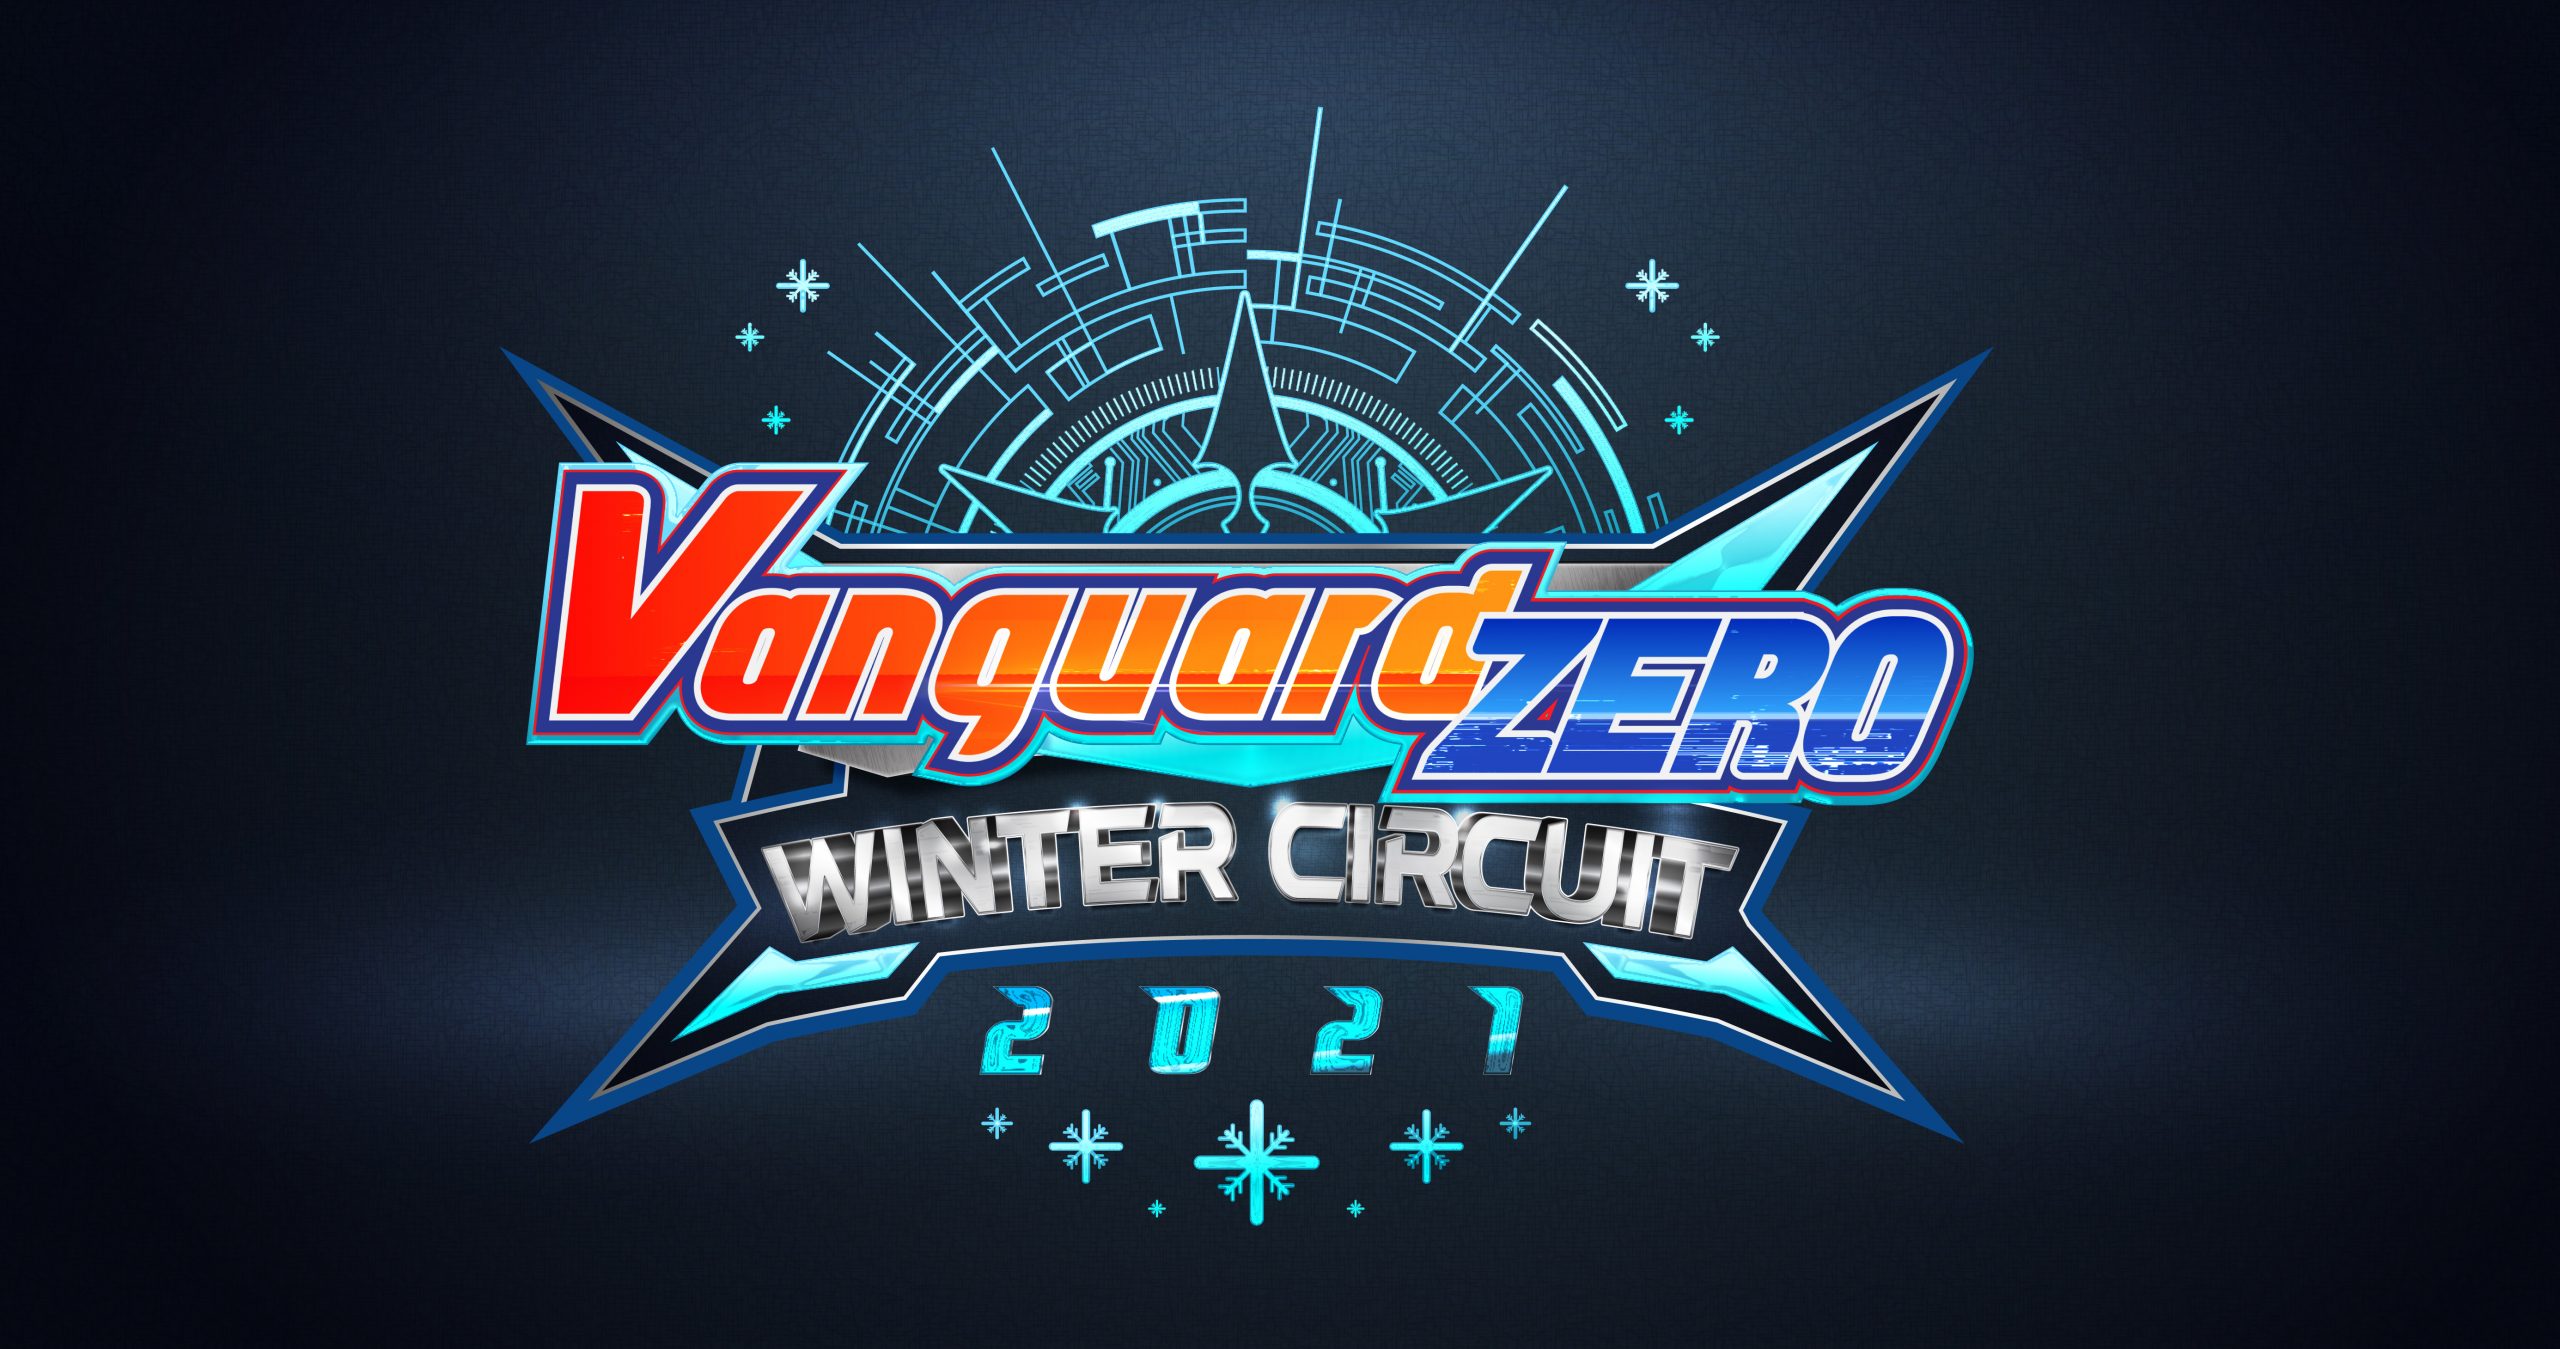 Vanguard Zero Winter Circuit 2021